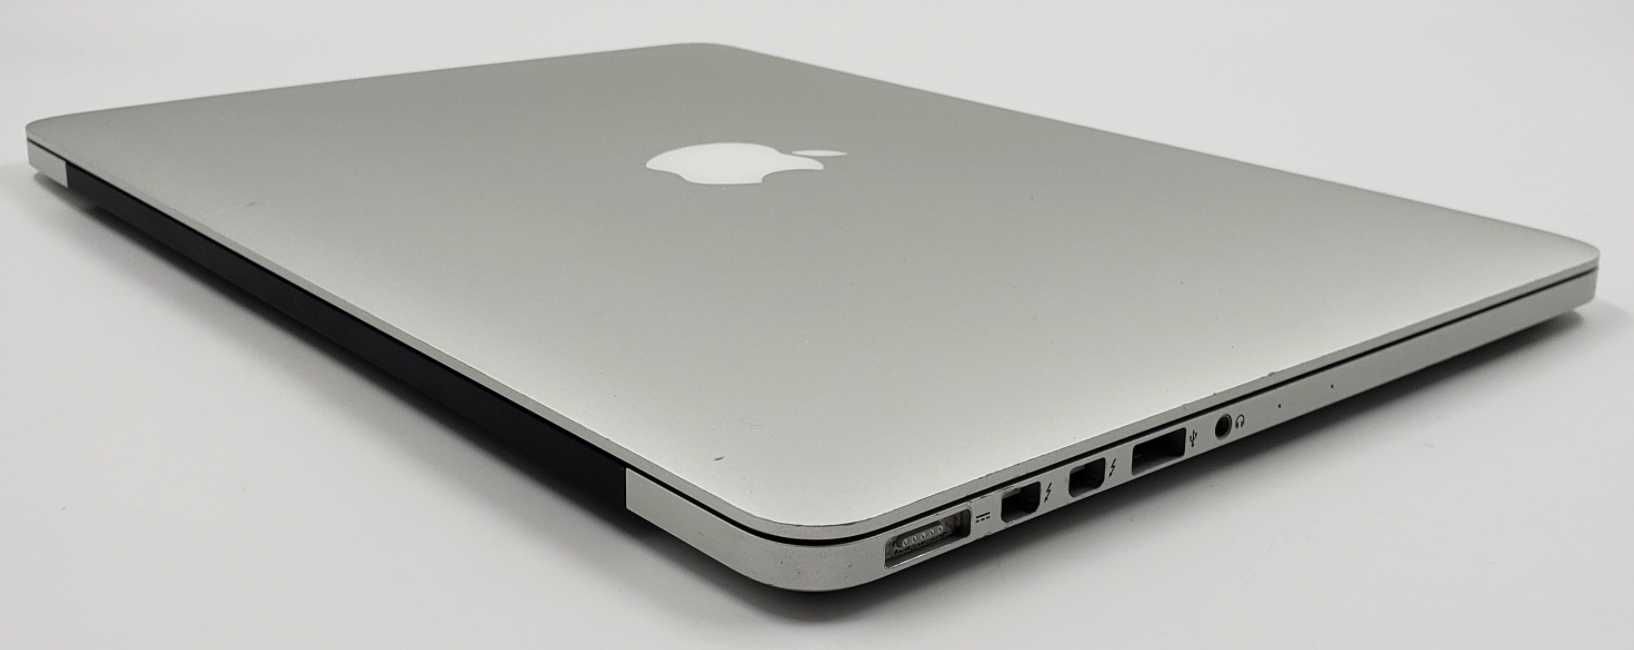 УЦЕНКА! Ноутбук Apple MacBook Pro 13" (MF843) 2015 i7/16/128/ TRADE IN